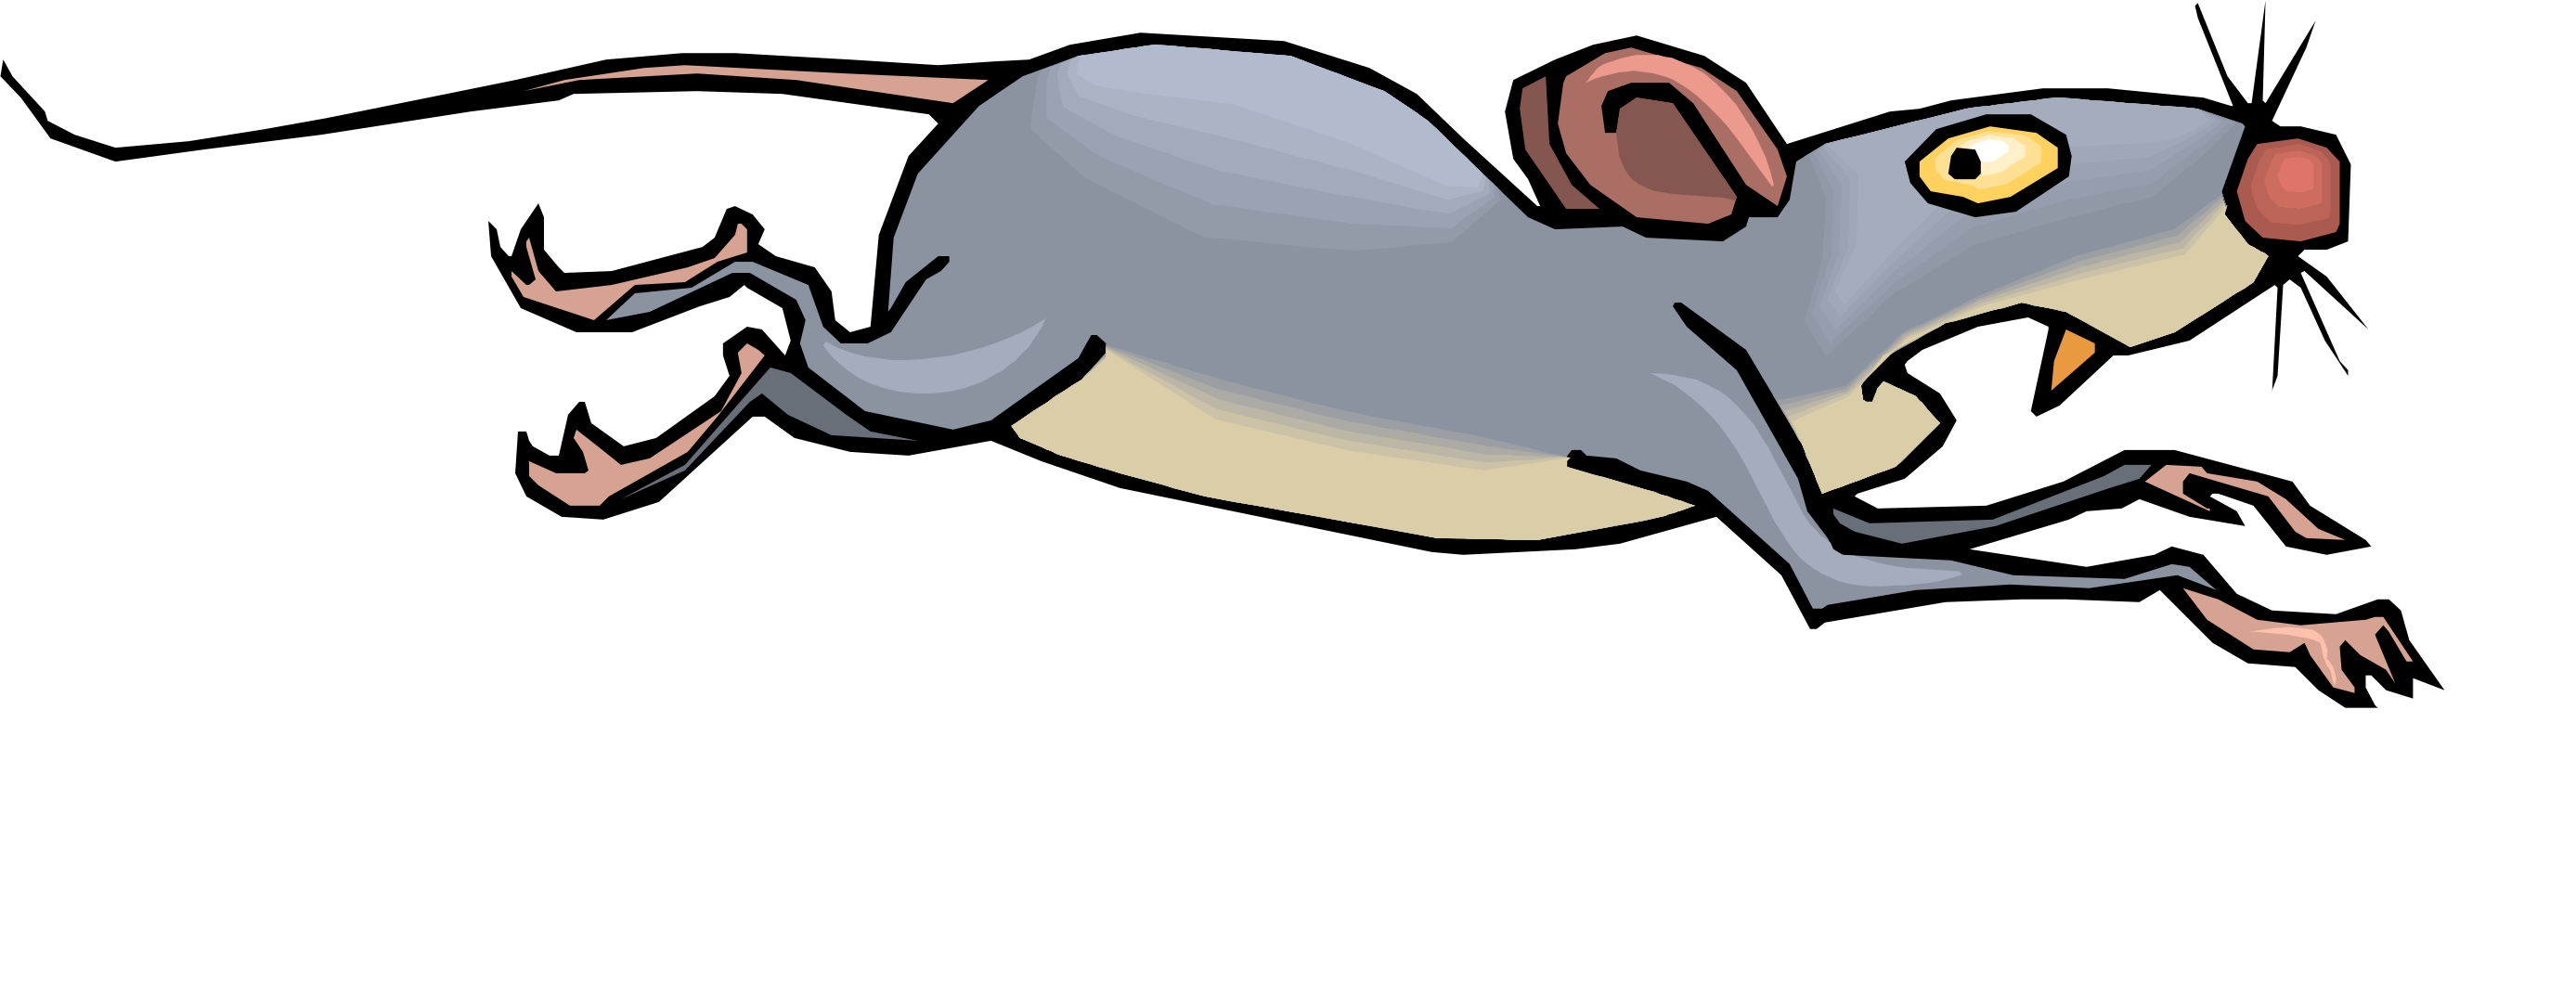 clipart mouse cartoon - photo #34